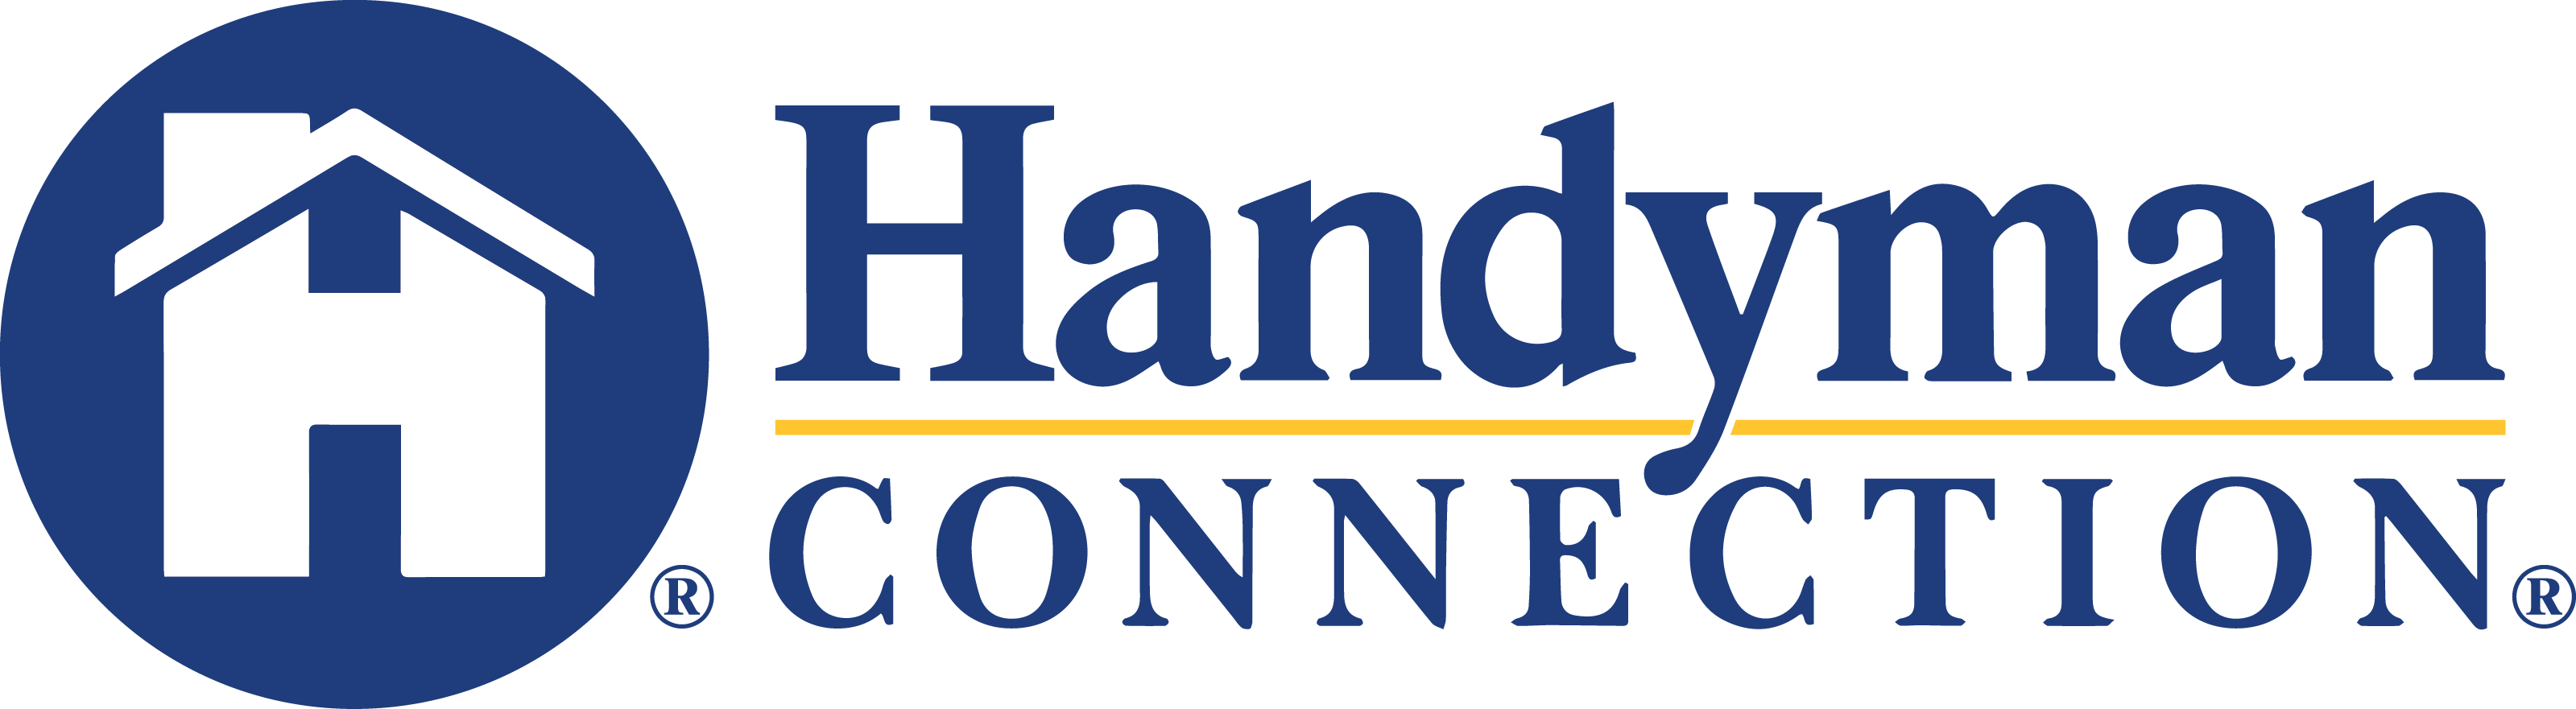 https://handymanconnection.com/mountain-view/wp-content/uploads/sites/34/2021/06/HandymanConnection-logo-2.png